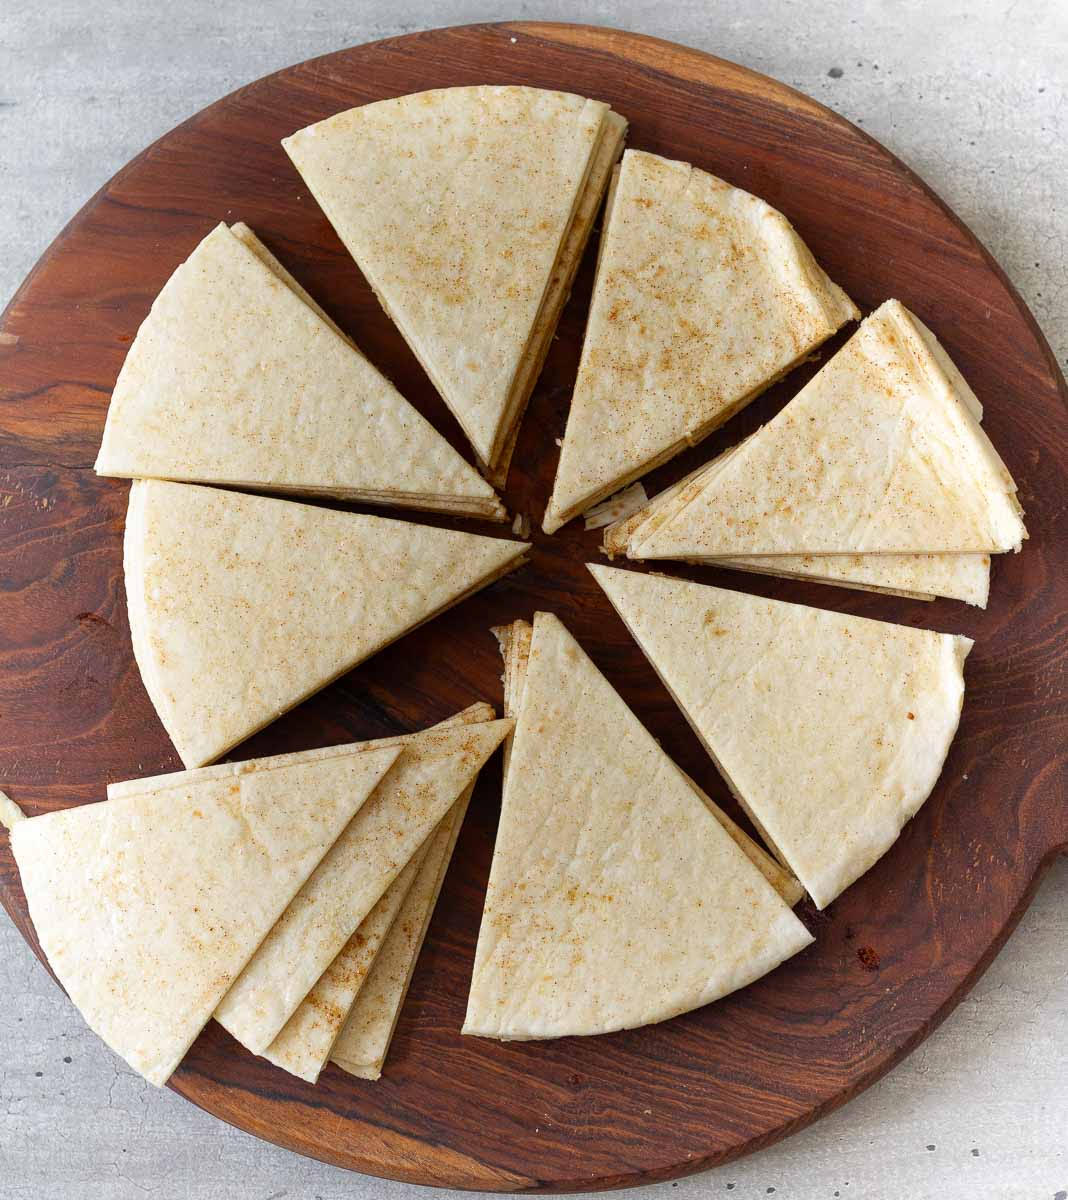 cut the tortillas into triangles